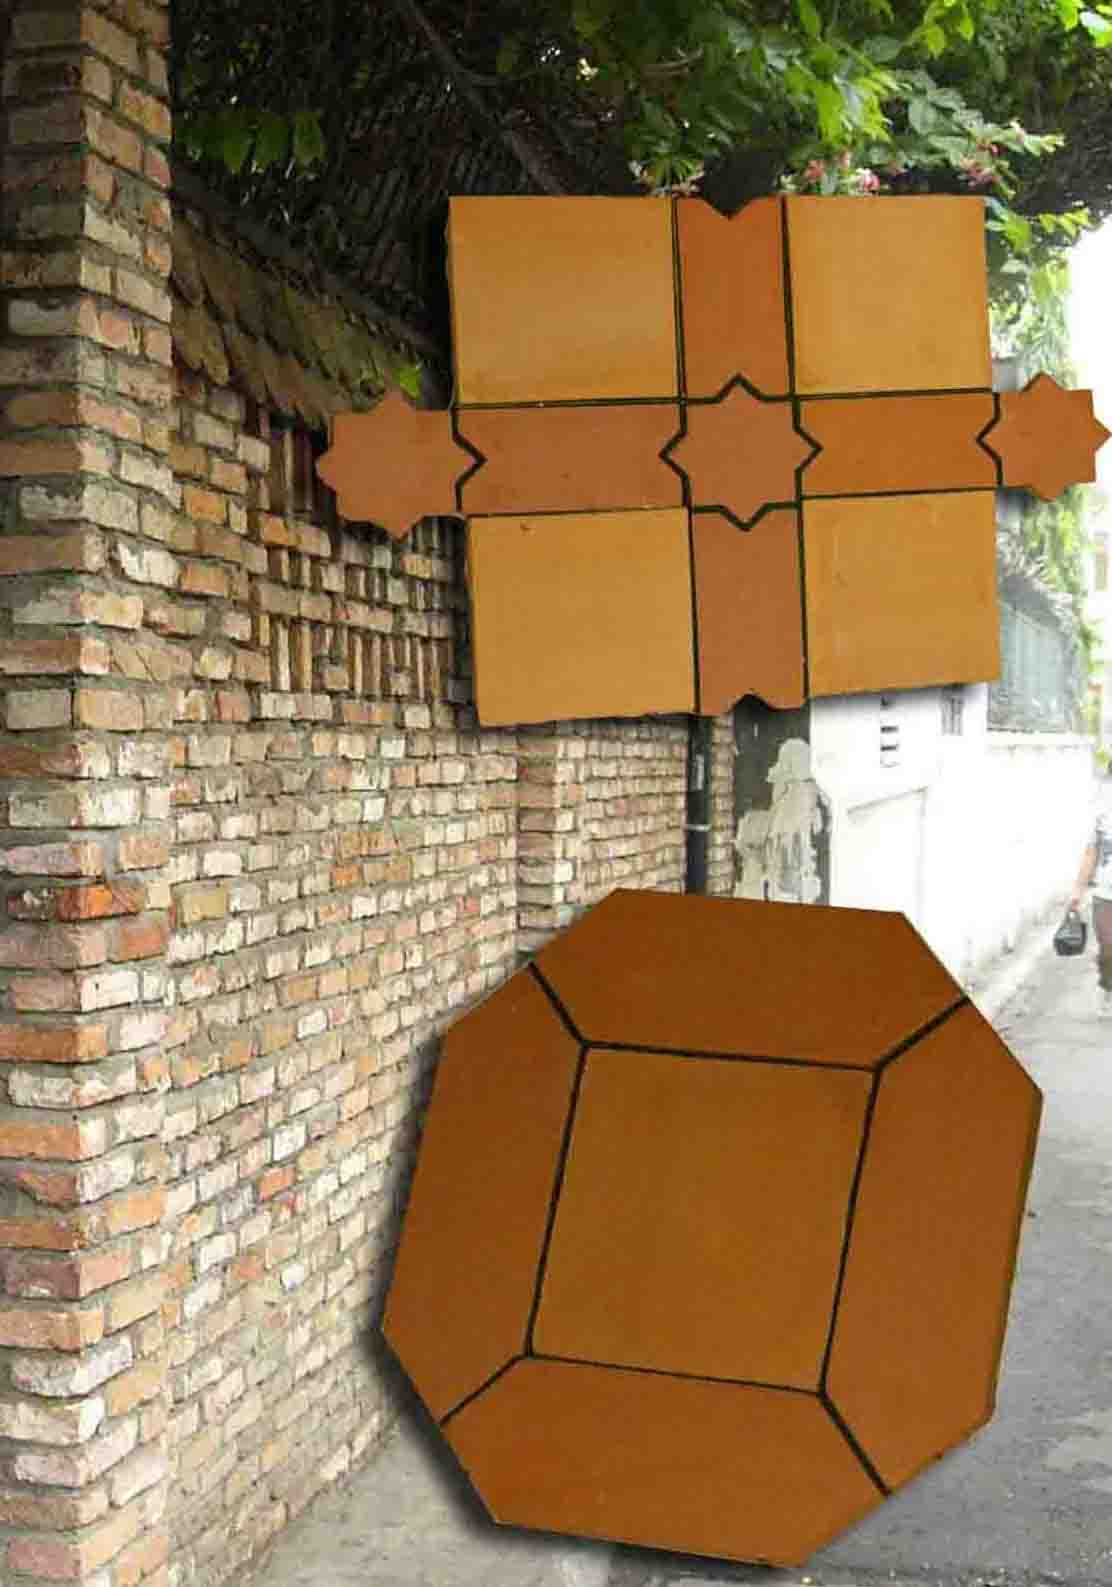  Terracotta Deco Clay Block And Tiles (Терракотовая Deco глины, и черепица)